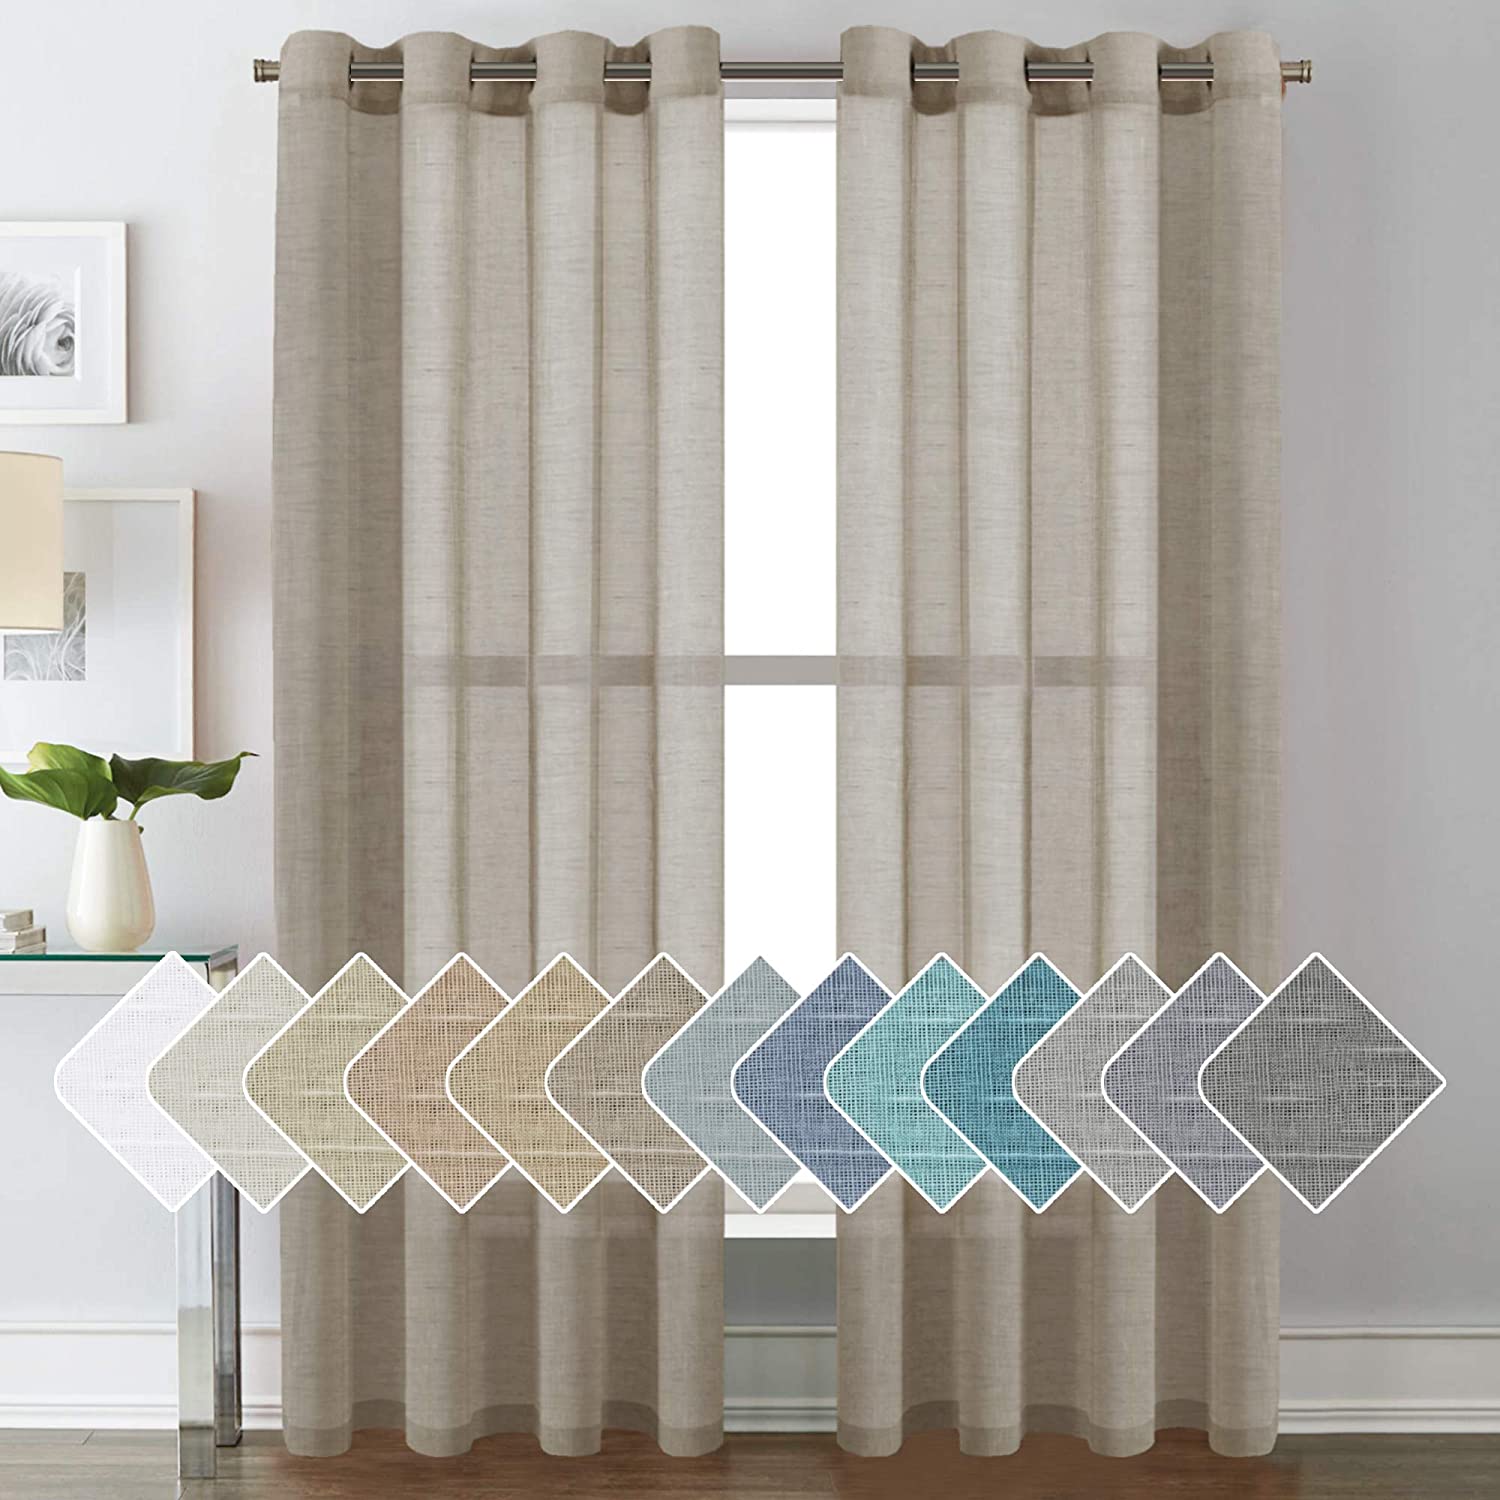 4.H.VERSAILTEX Natural Linen Sheer Curtains Soft Semi Sheer Curtain Closet Curtains